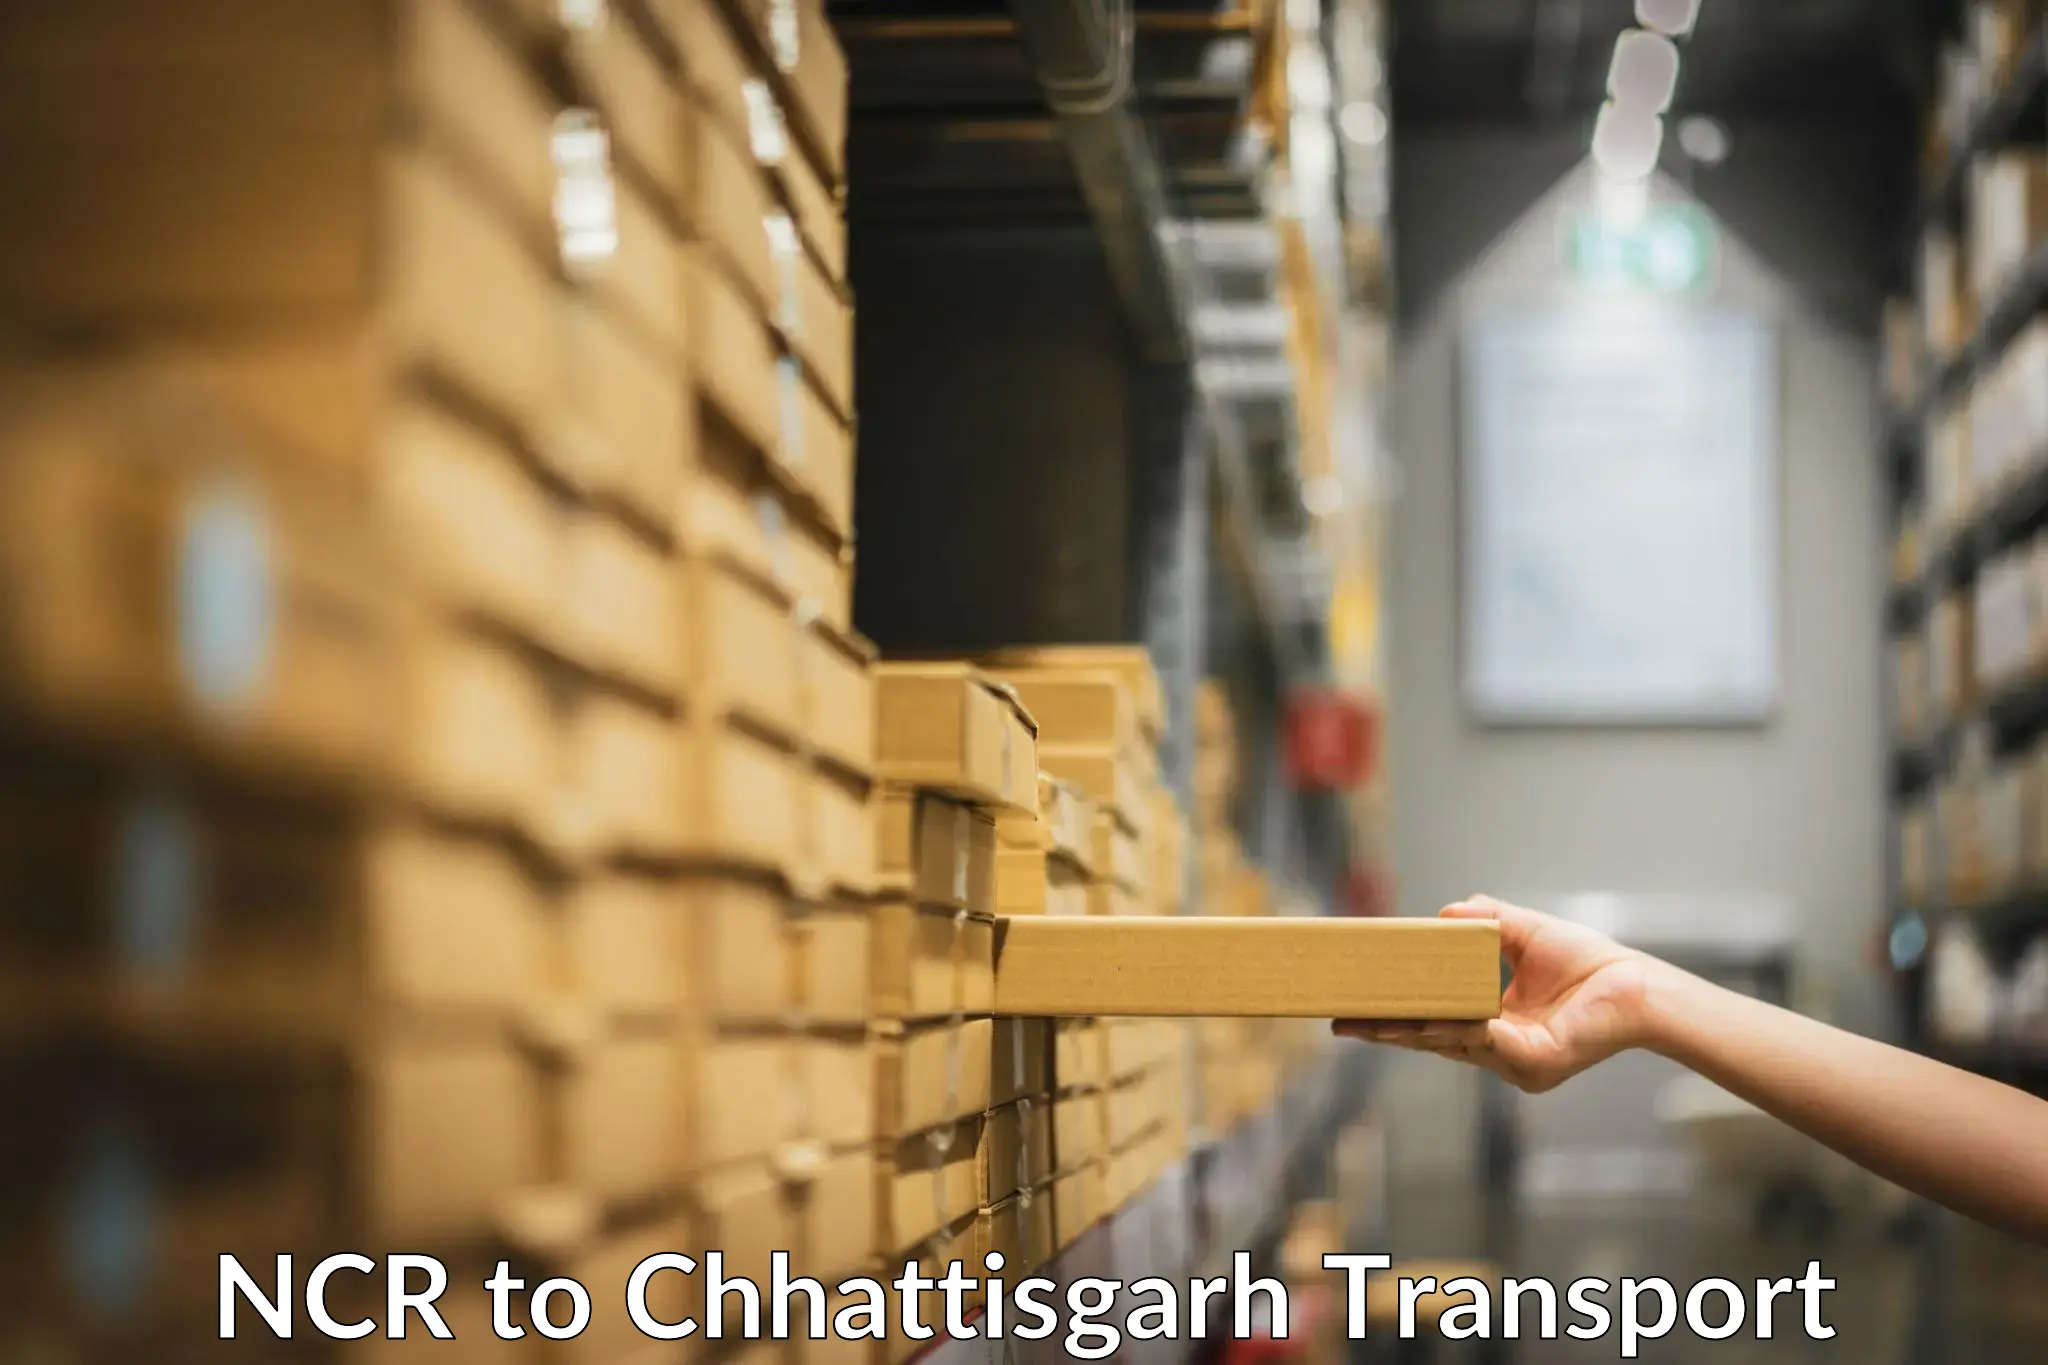 Express transport services NCR to Patna Chhattisgarh